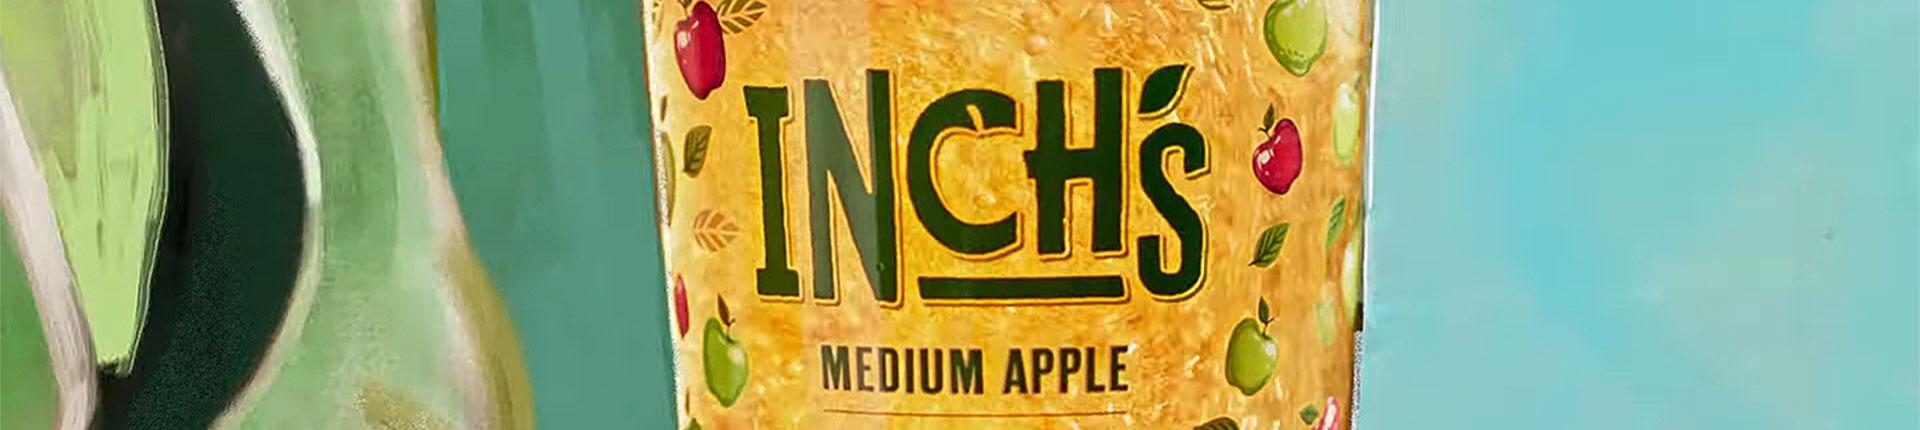 HEINEKEN: Our Sustainable Cider Brand Inch's is here!